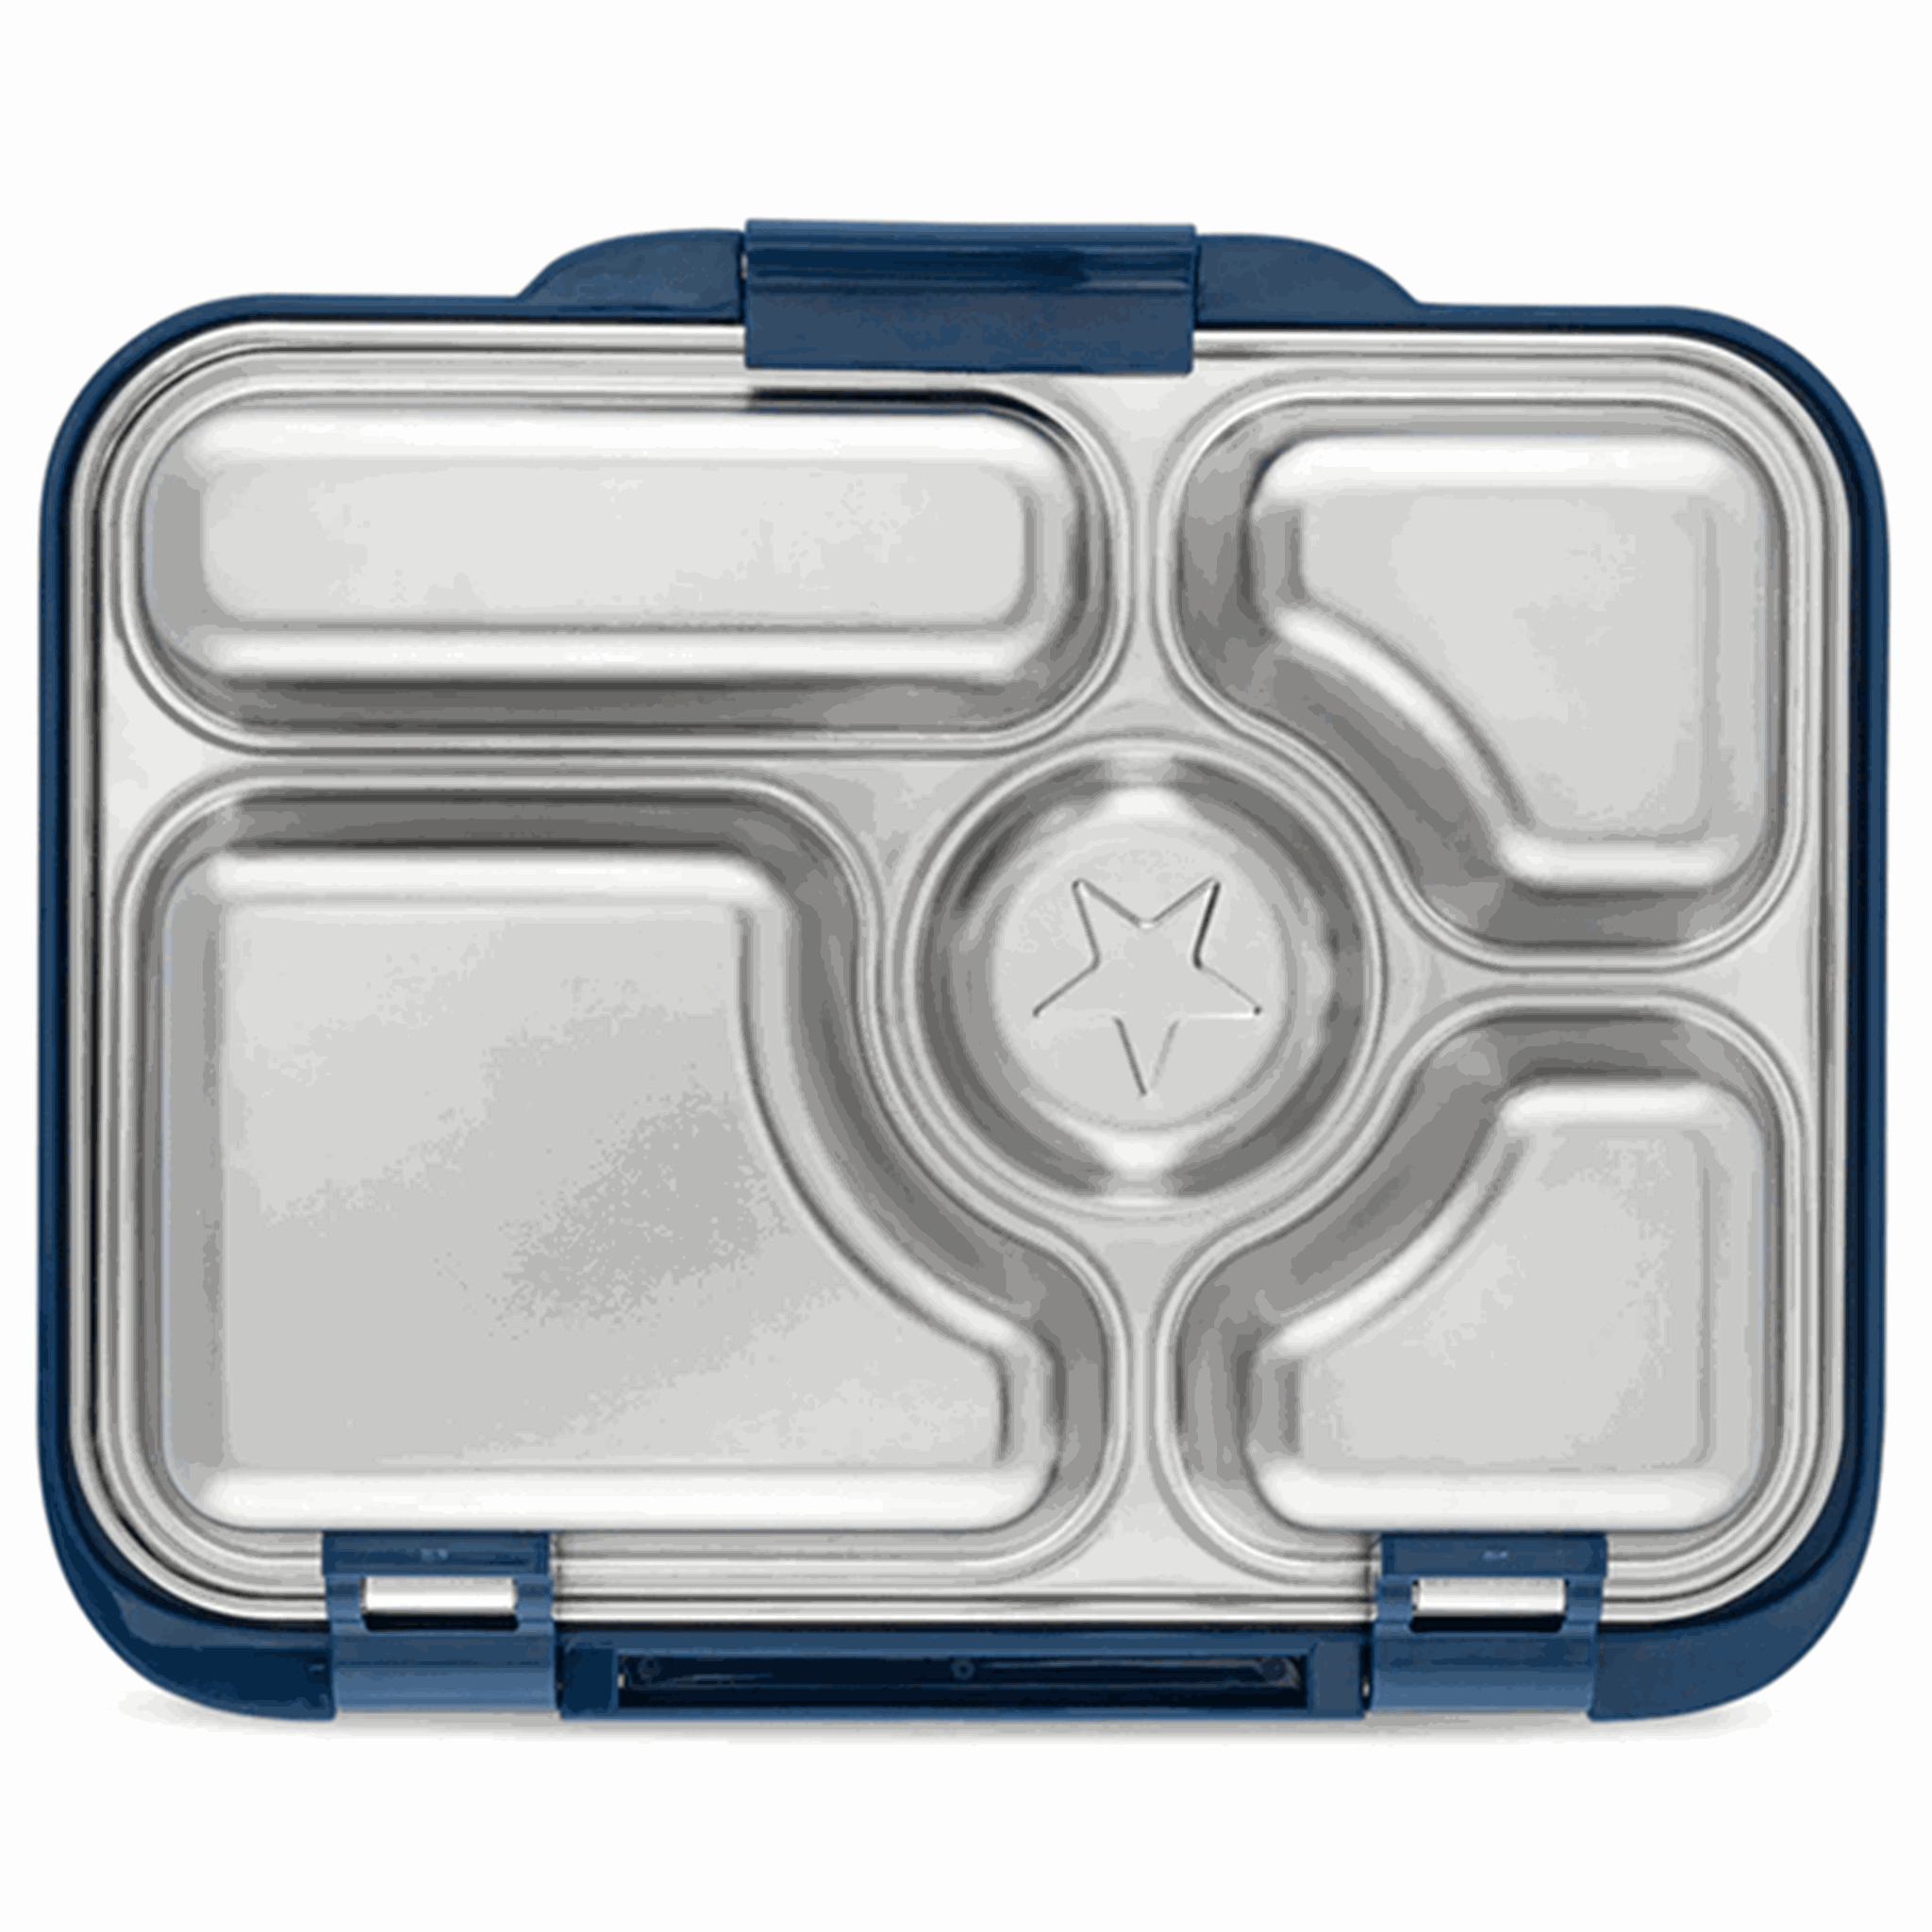 Yumbox Presto Stainless Steel Lunch Box Santa Fe Blue 7